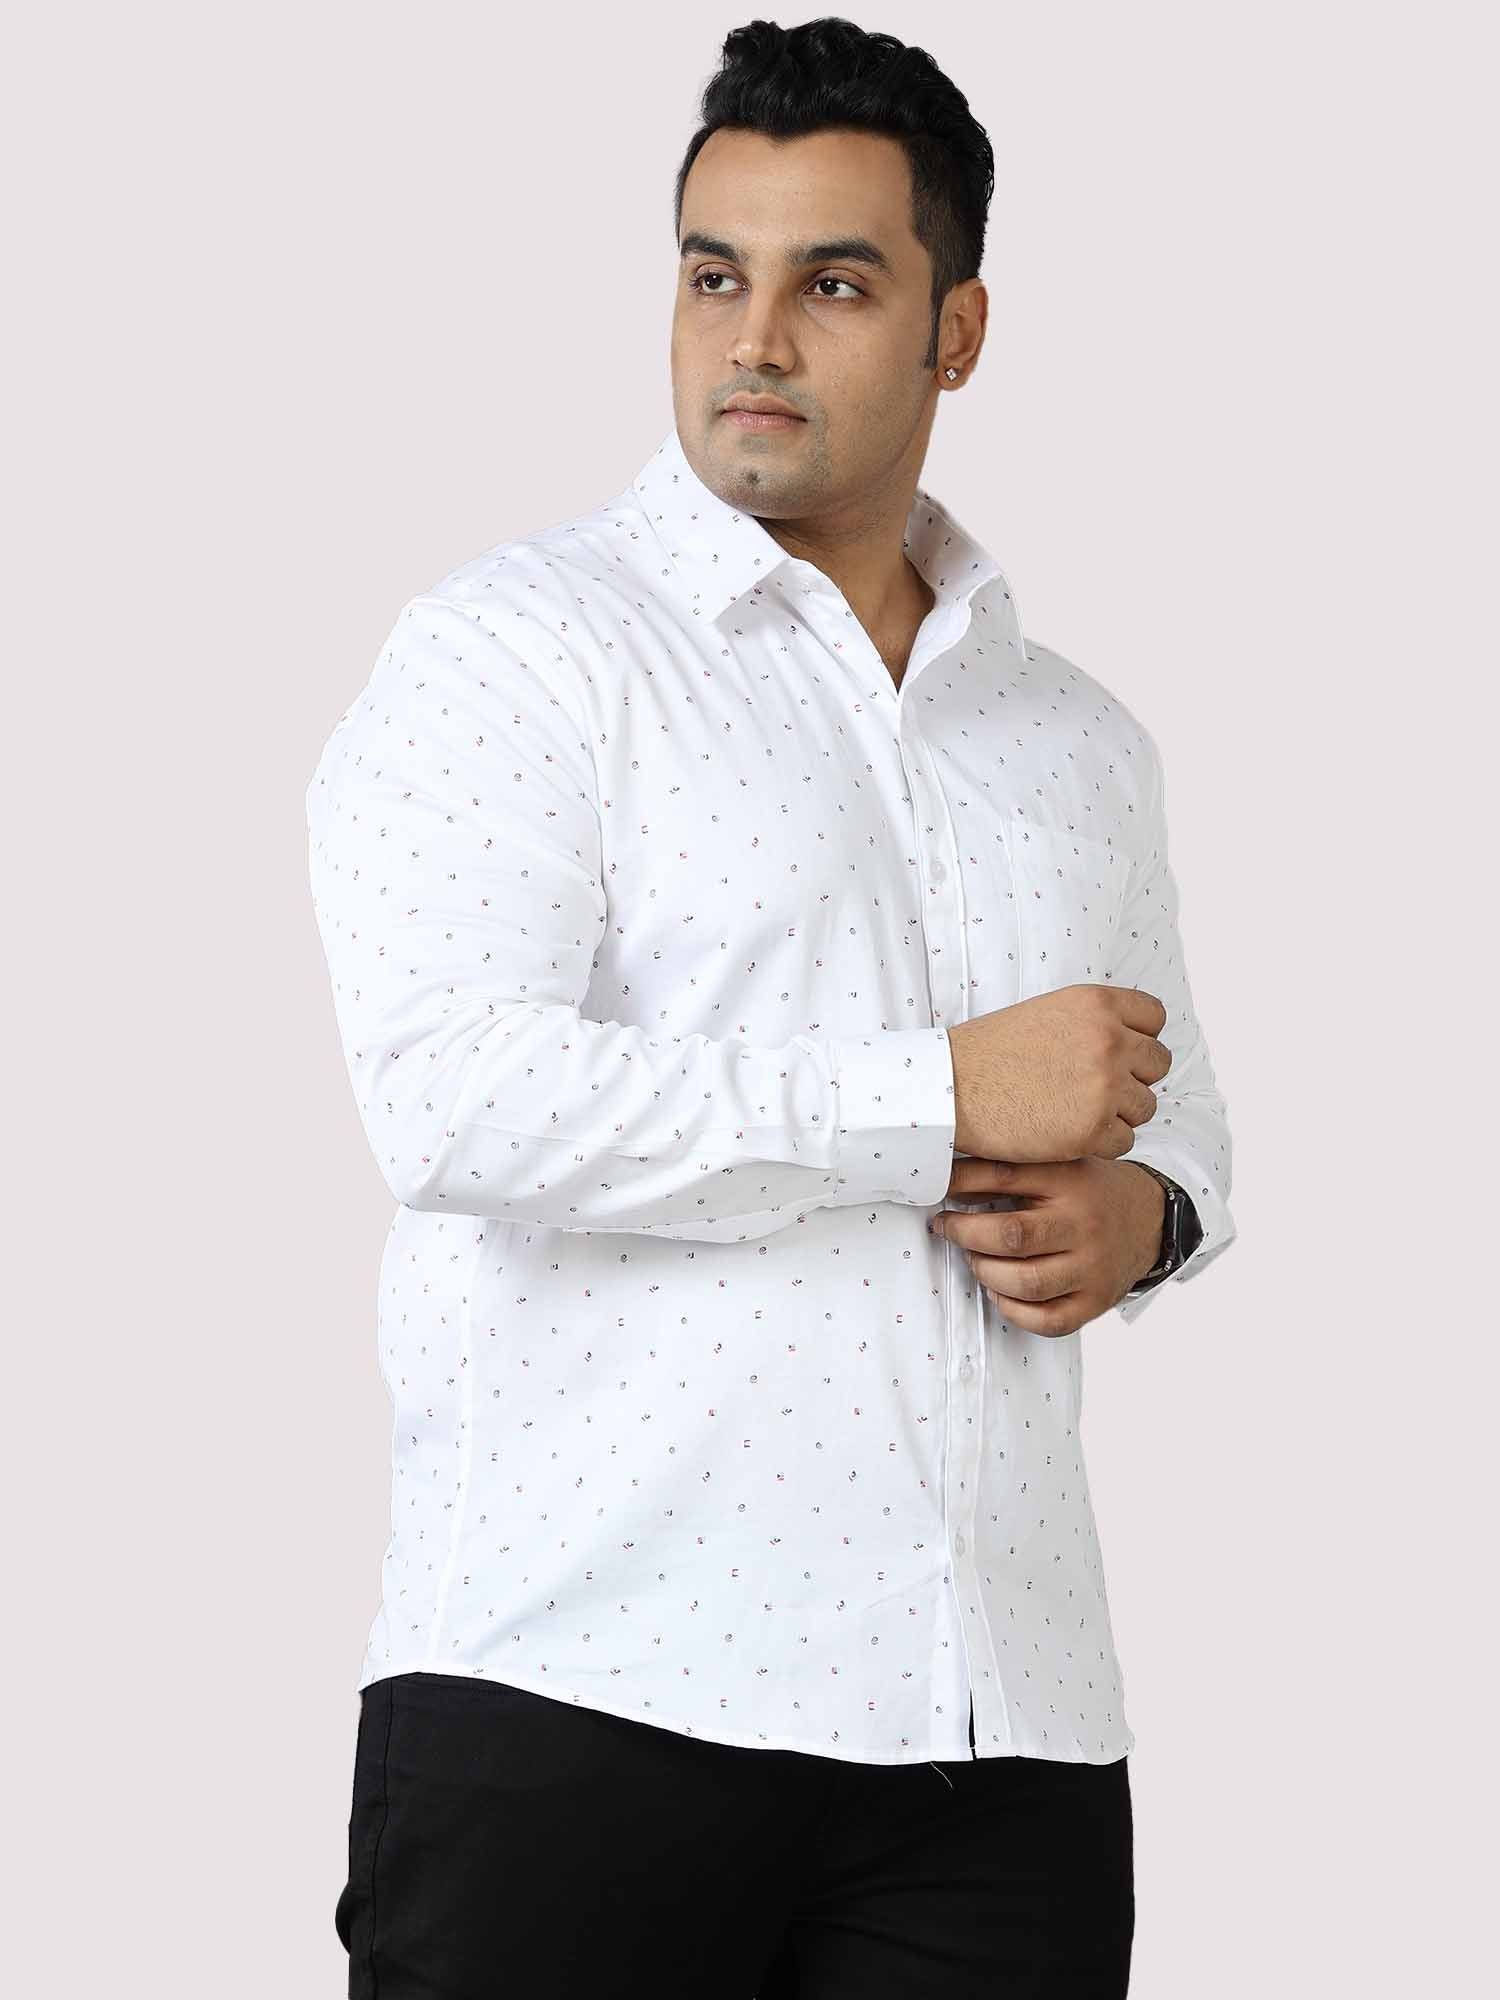 Exotic Printed Cotton Full Shirt Men's Plus Size - Guniaa Fashions